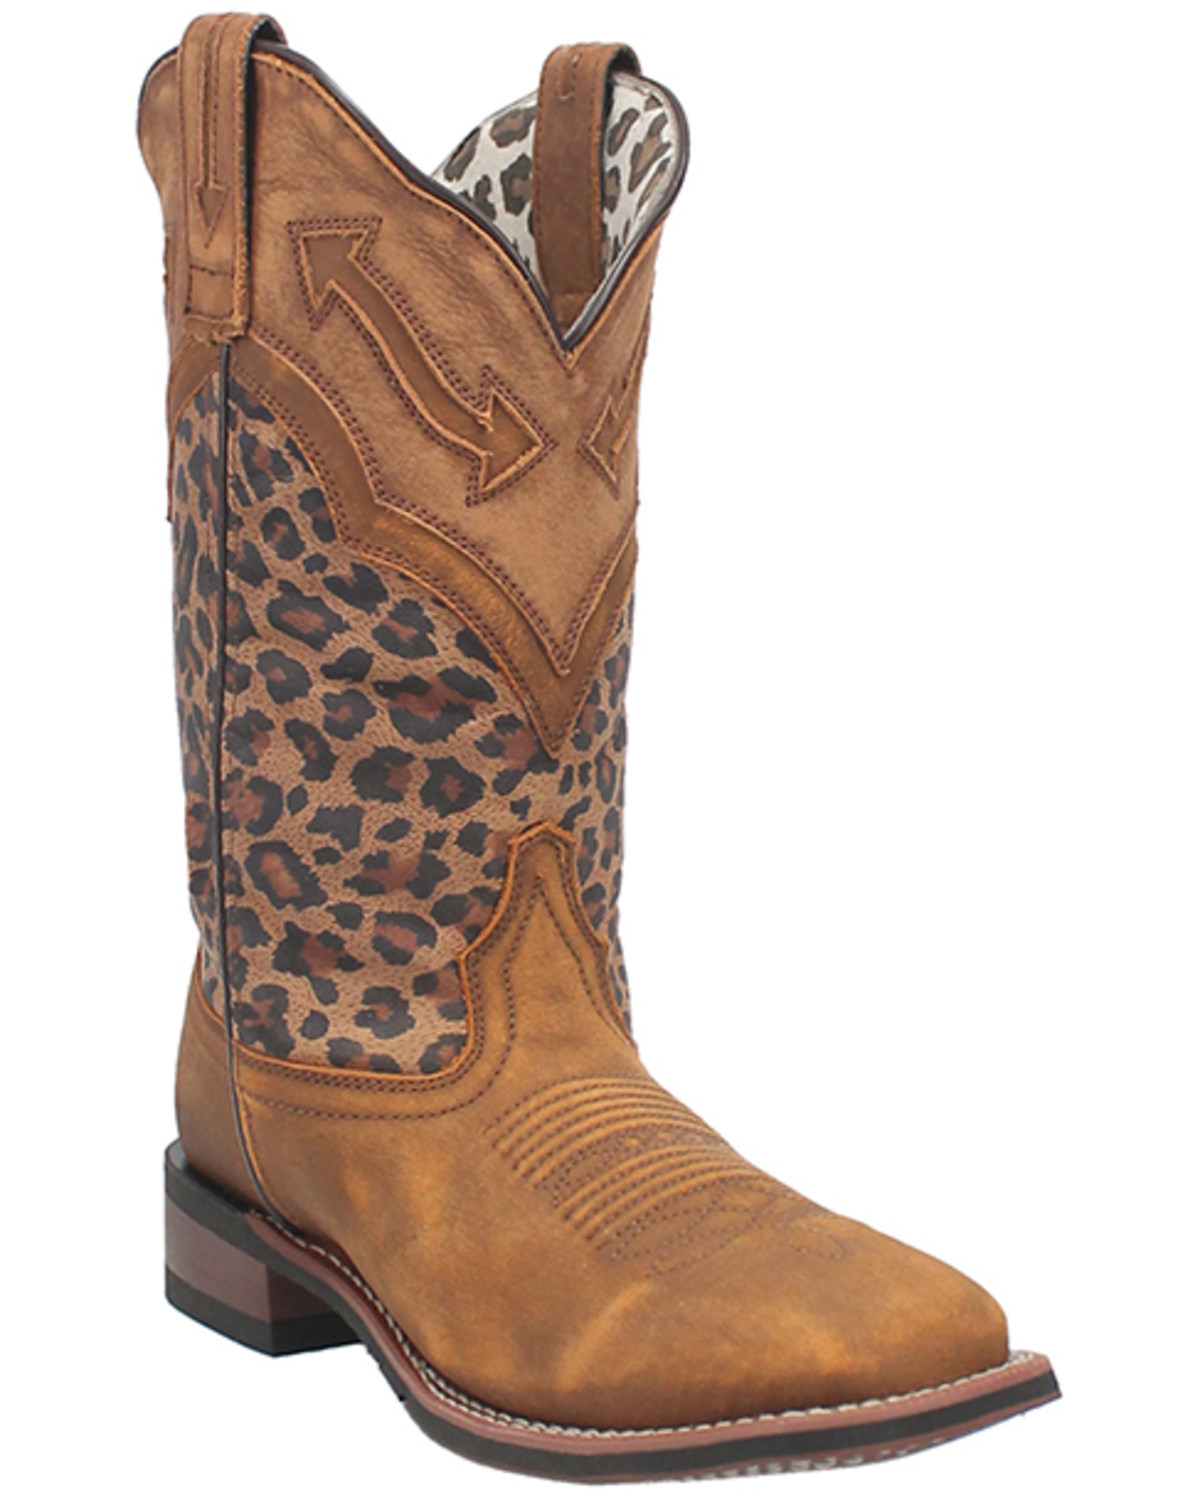 Laredo Women's Wild Arrow Western Performance Boots - Broad Square Toe